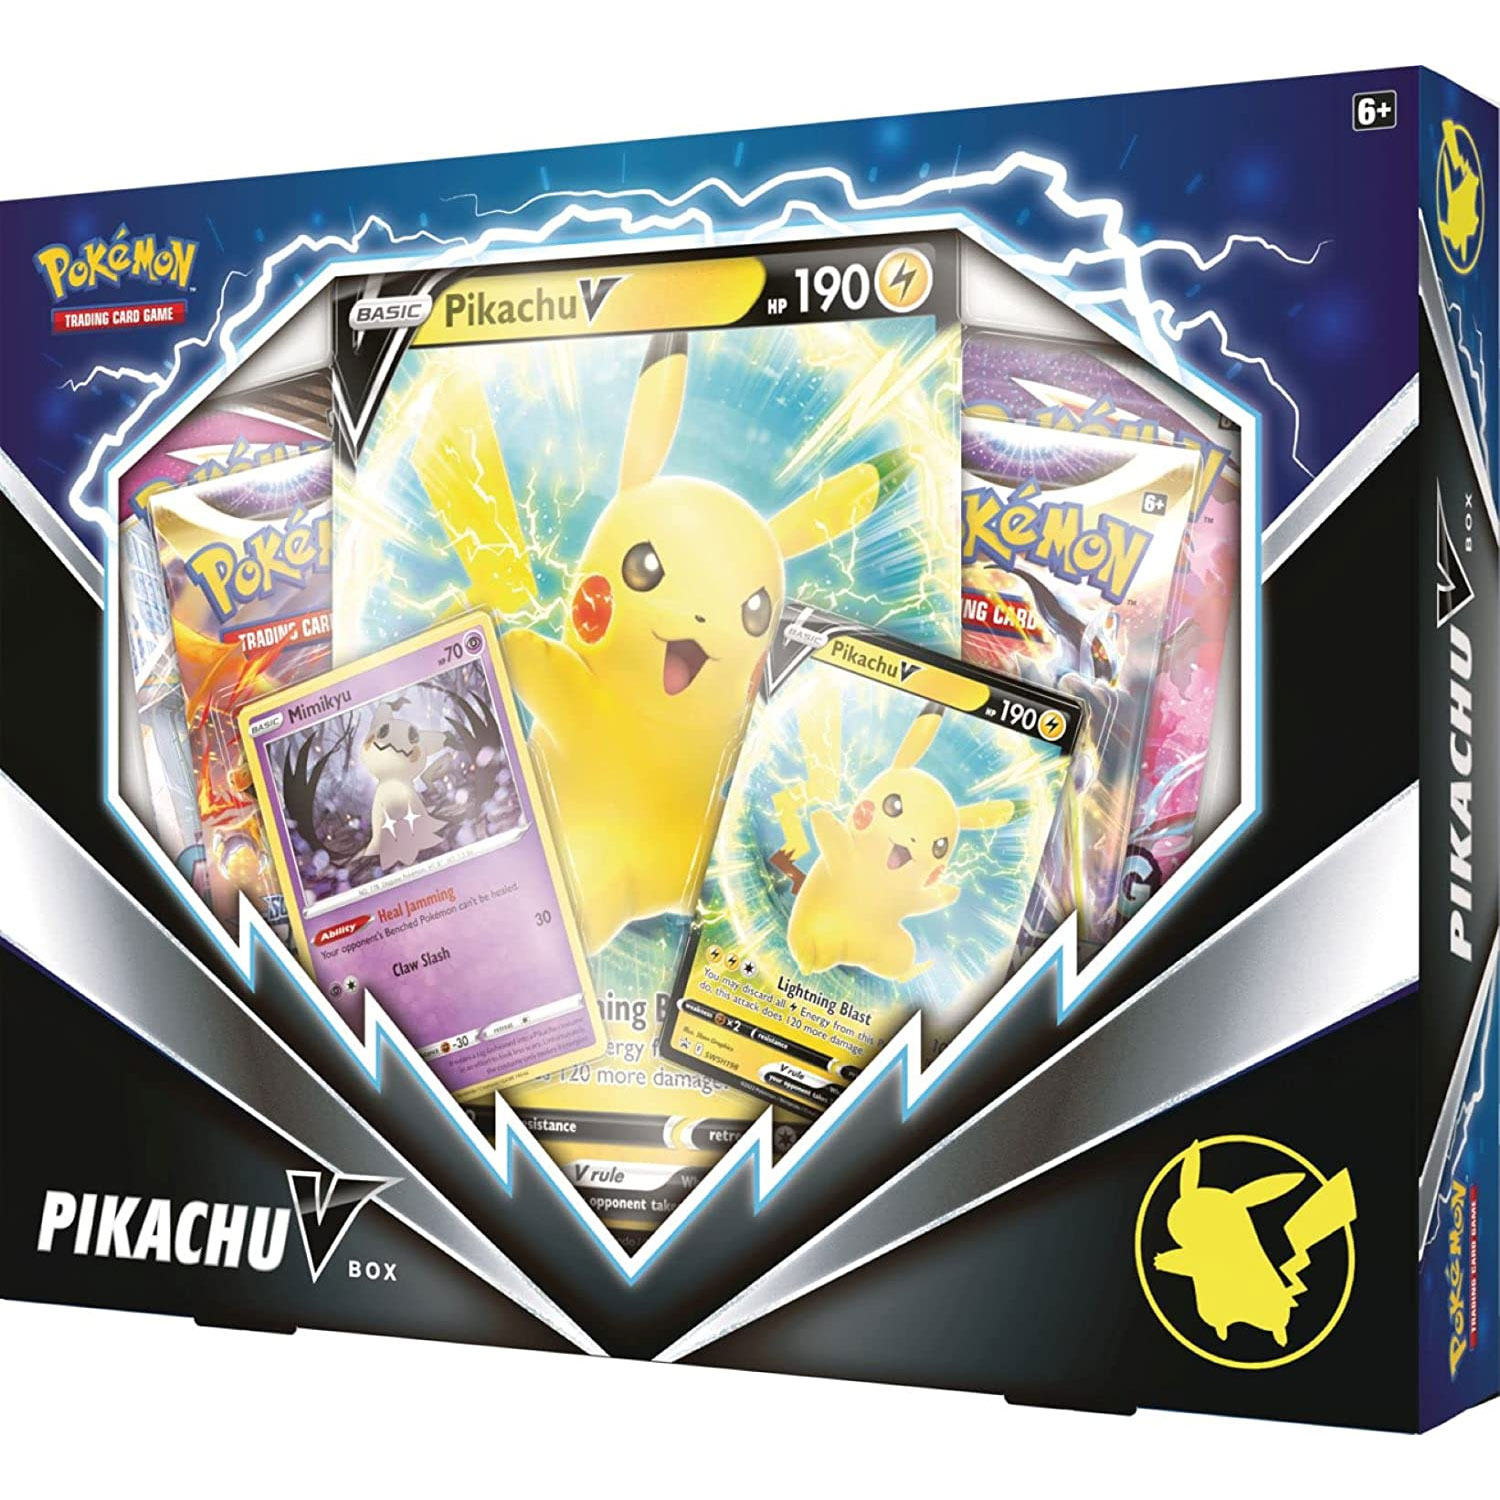 Pokemon TCG card box - Base set - classic - genric - Pikachu theme